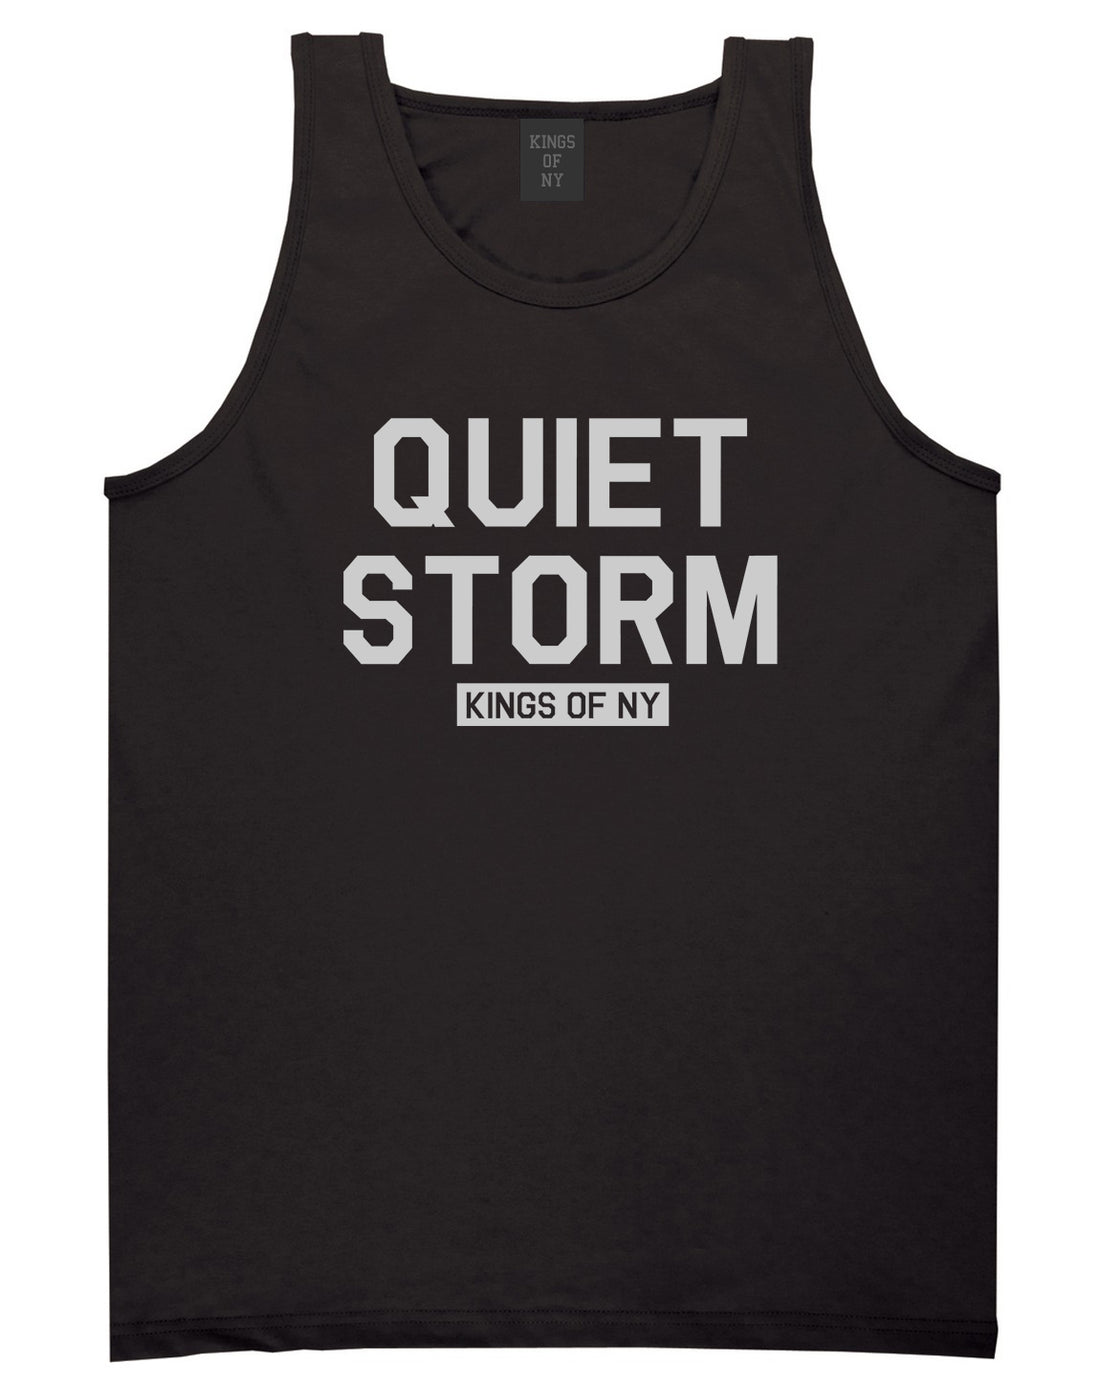 Quiet Storm Kings Of NY Mens Tank Top Shirt Black